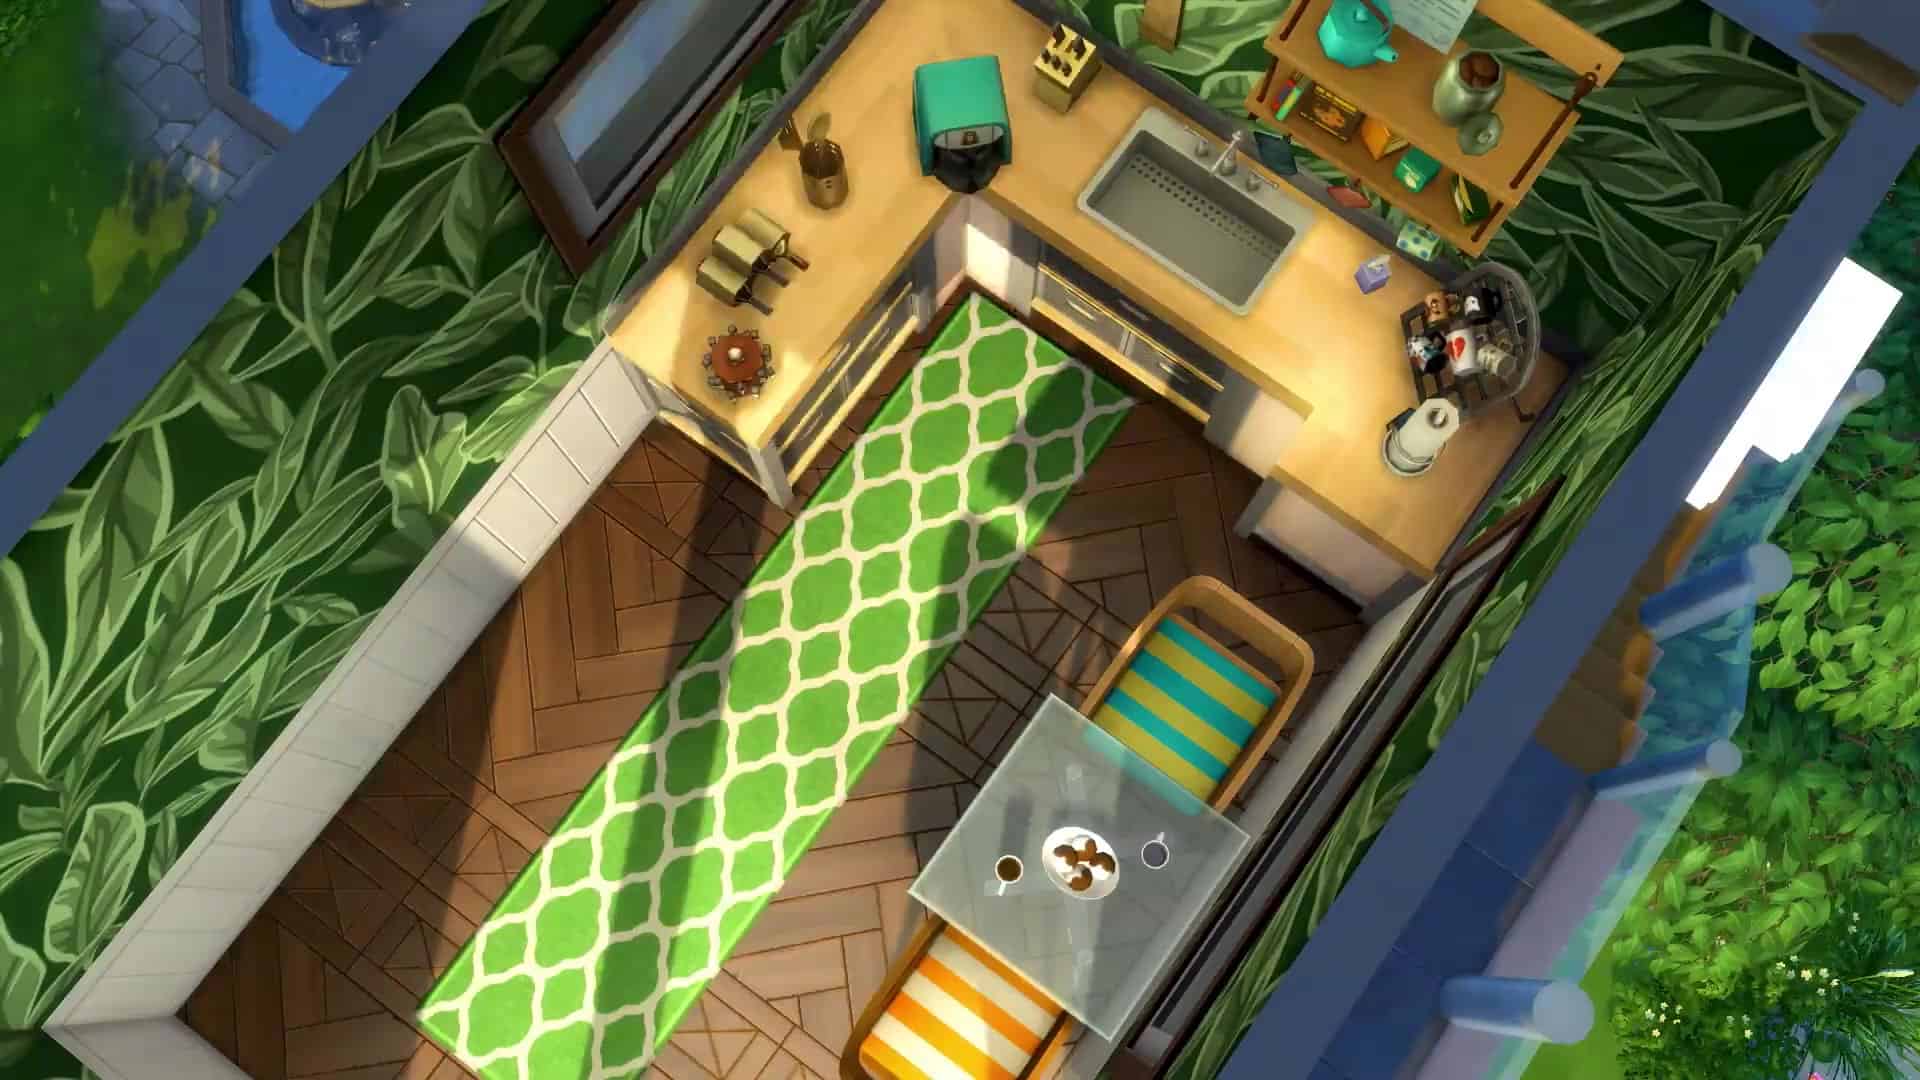 The Sims 4 Tiny Living Stuff Pack Screenshots 2020 (7)